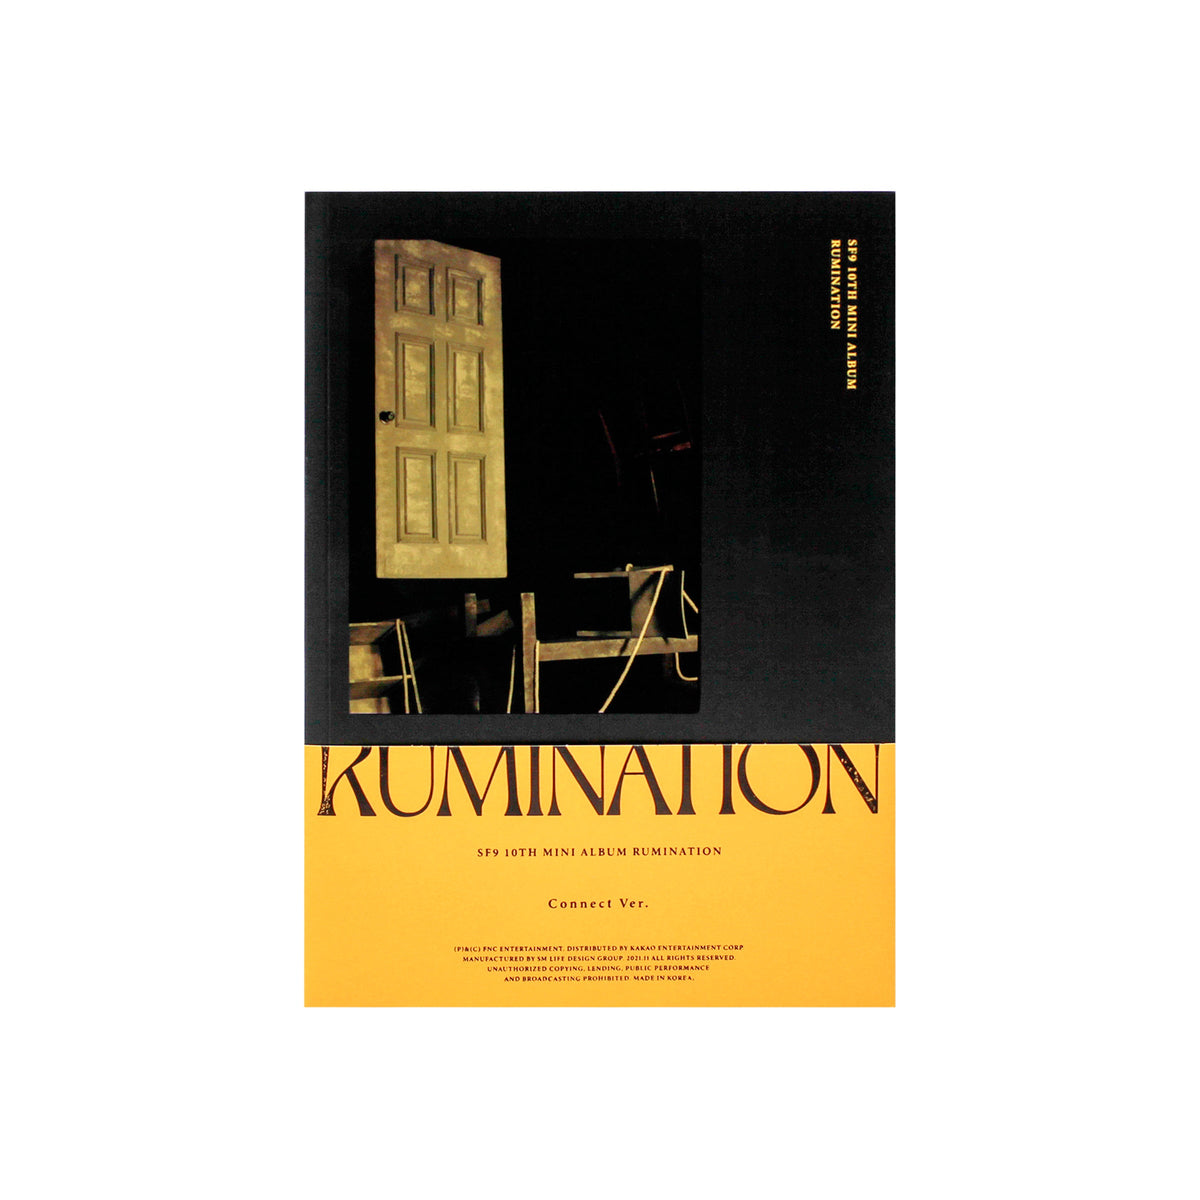 SF9 - RUMINATION 10th Mini Album Connect Ver - main image